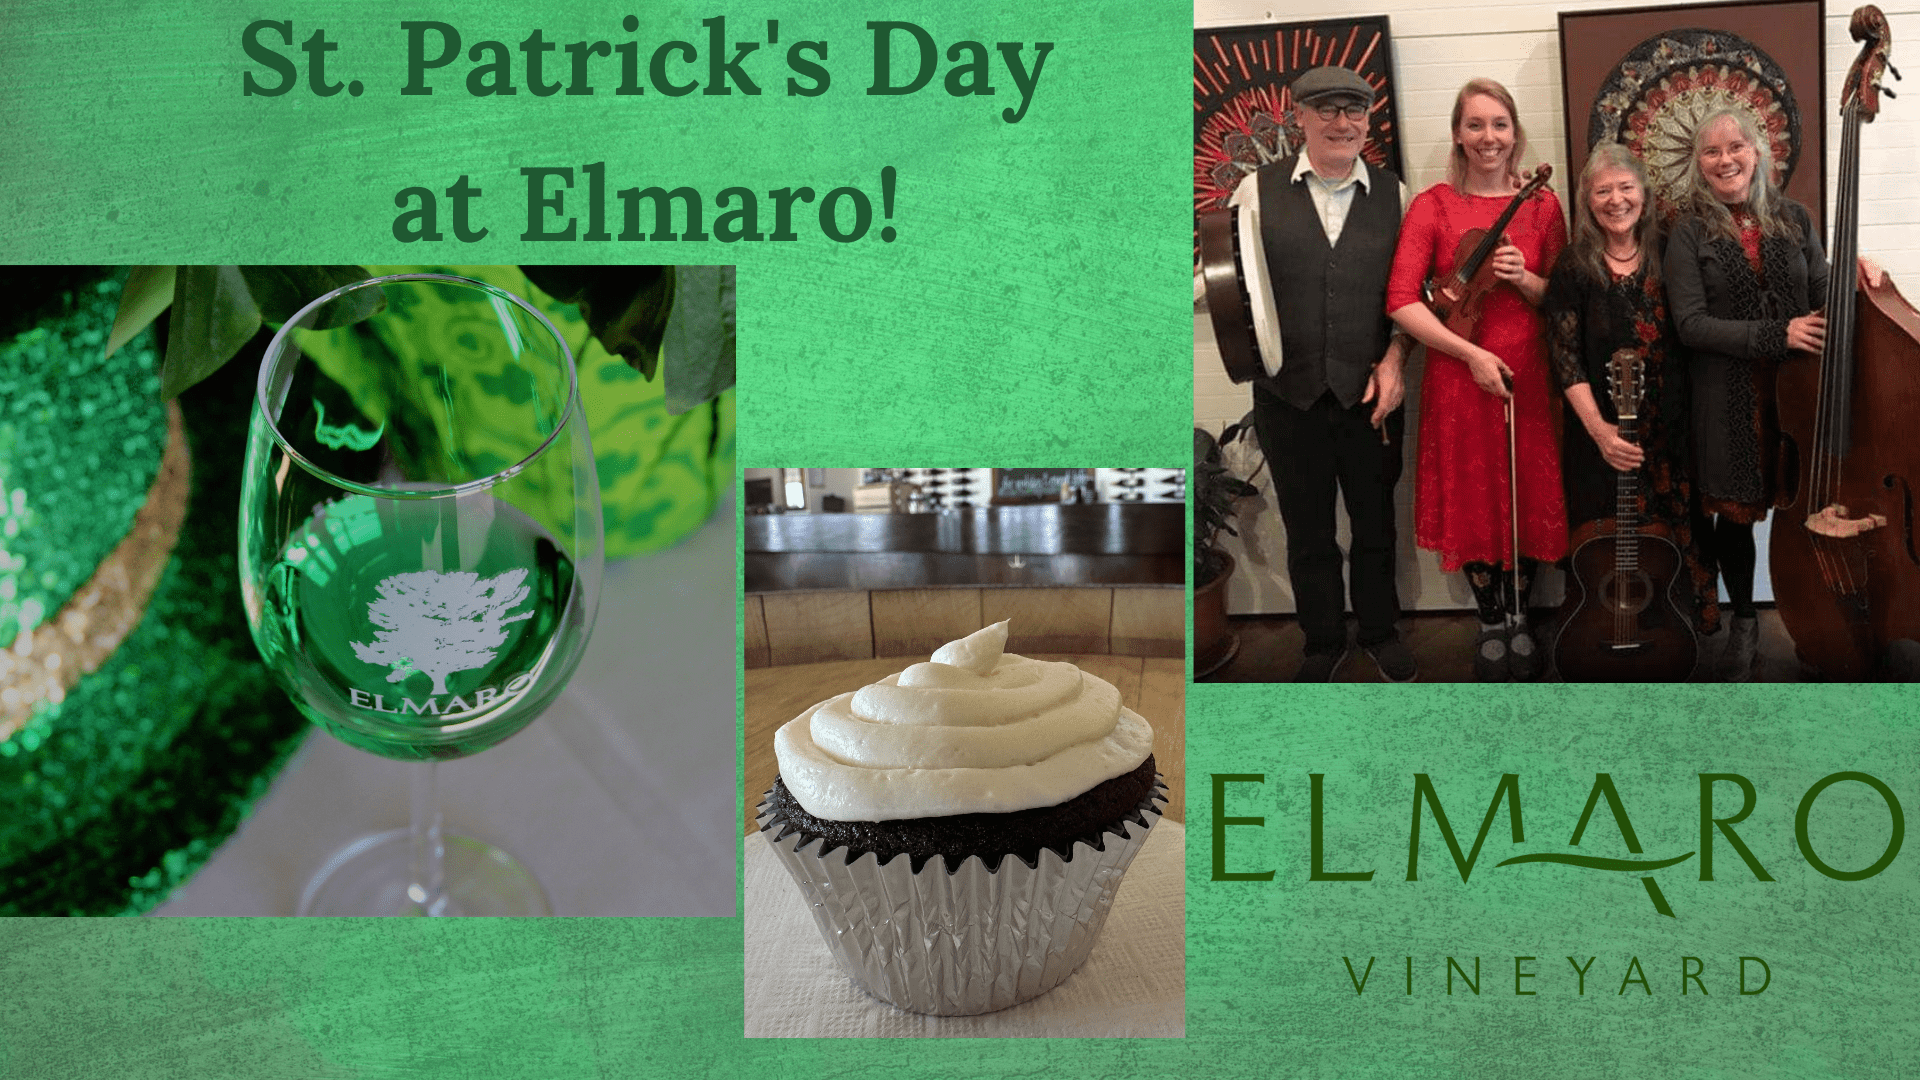 St. Patrick's Day at Elmaro! (1920 x 1080 px)